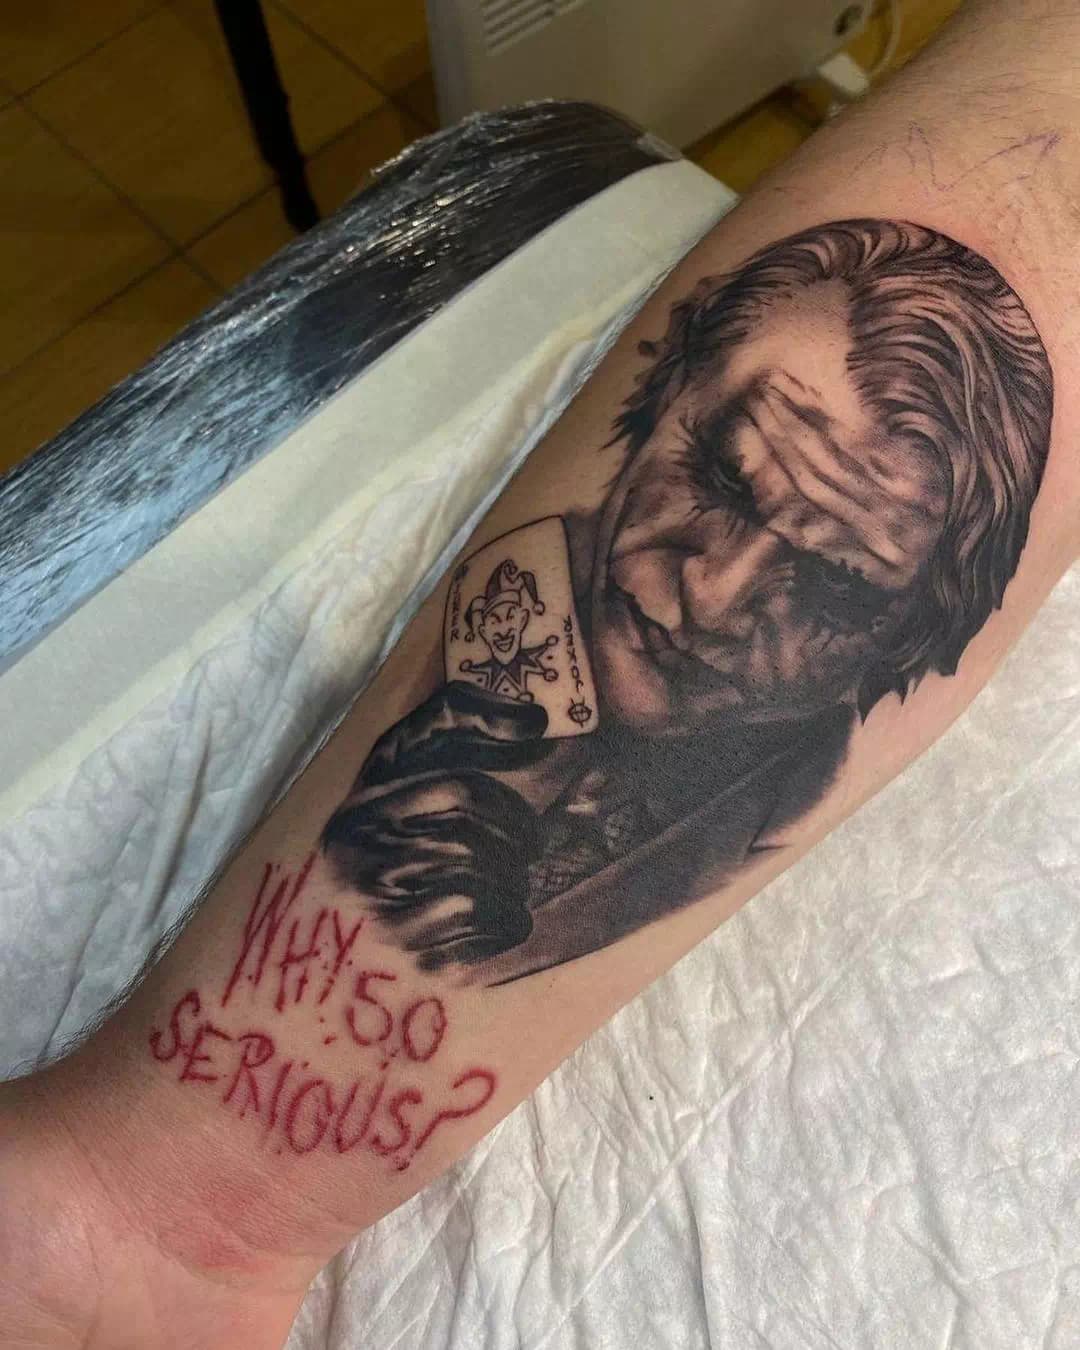 Tatuaje del Joker ¿Por qué tan serio? Tatuaje en el hombro 2